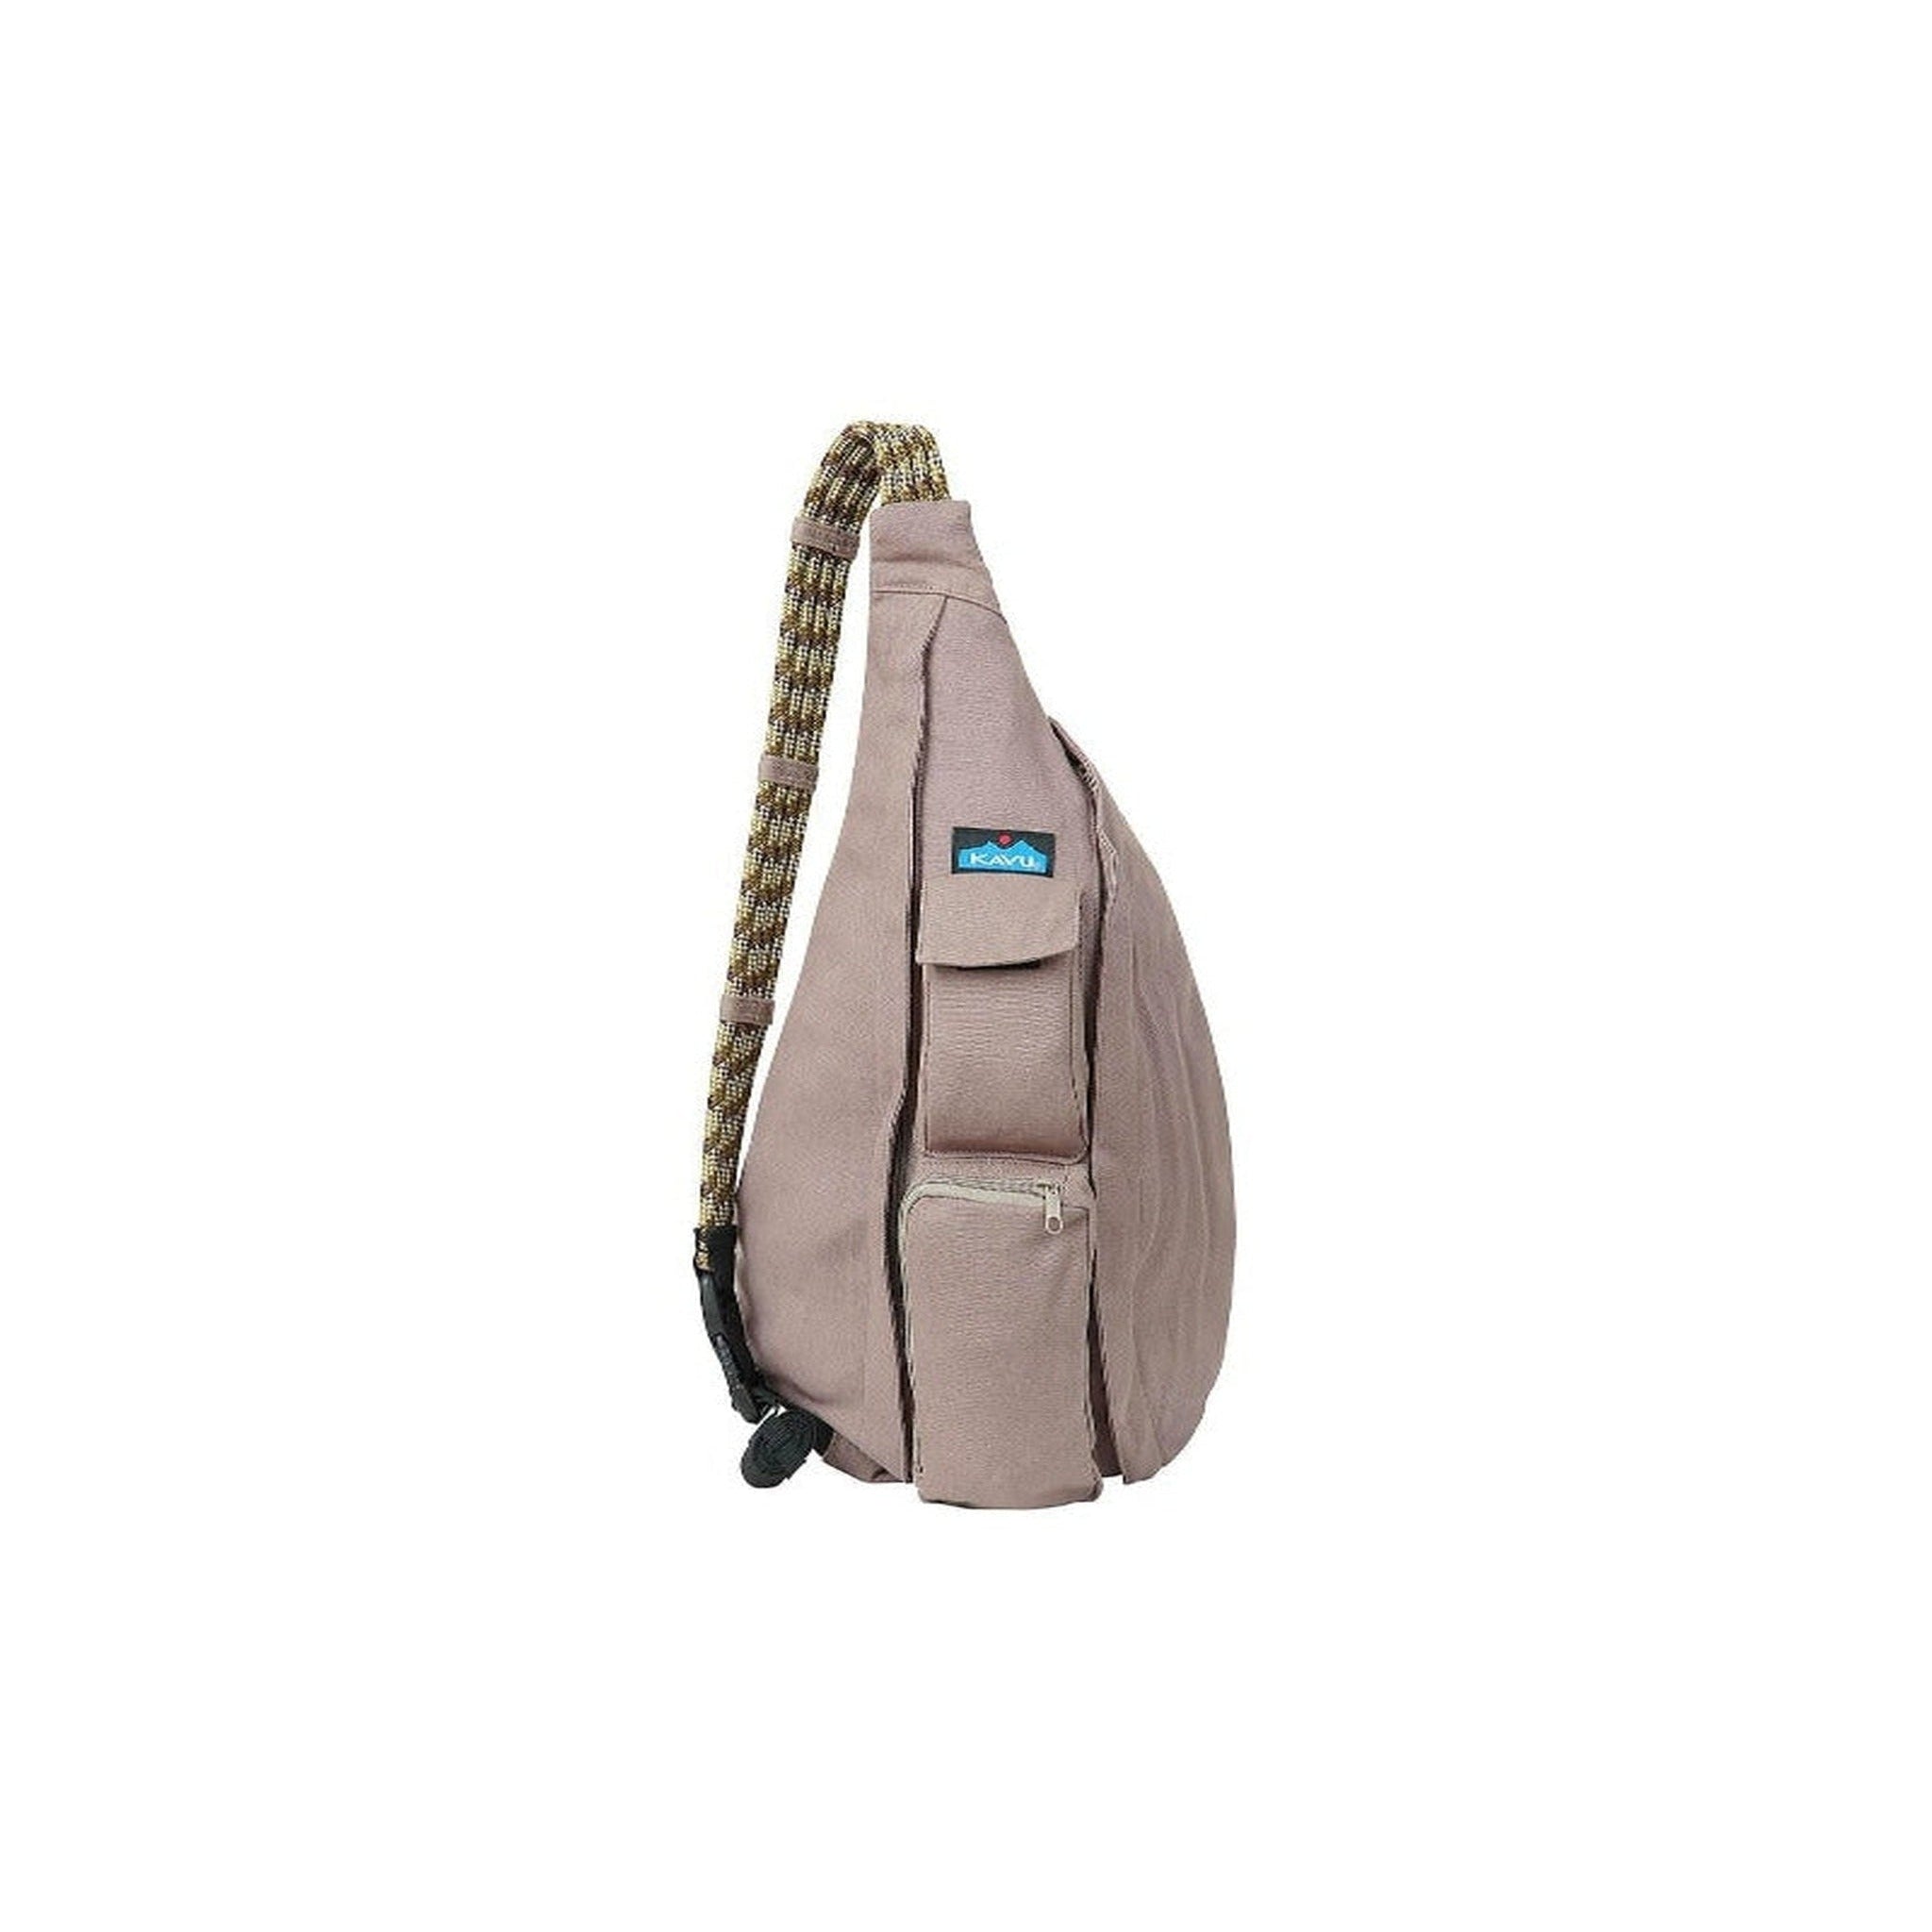 Got my kavu bag monogrammed | Kavu bag, Kavu bag outfit, Kavu rope bag